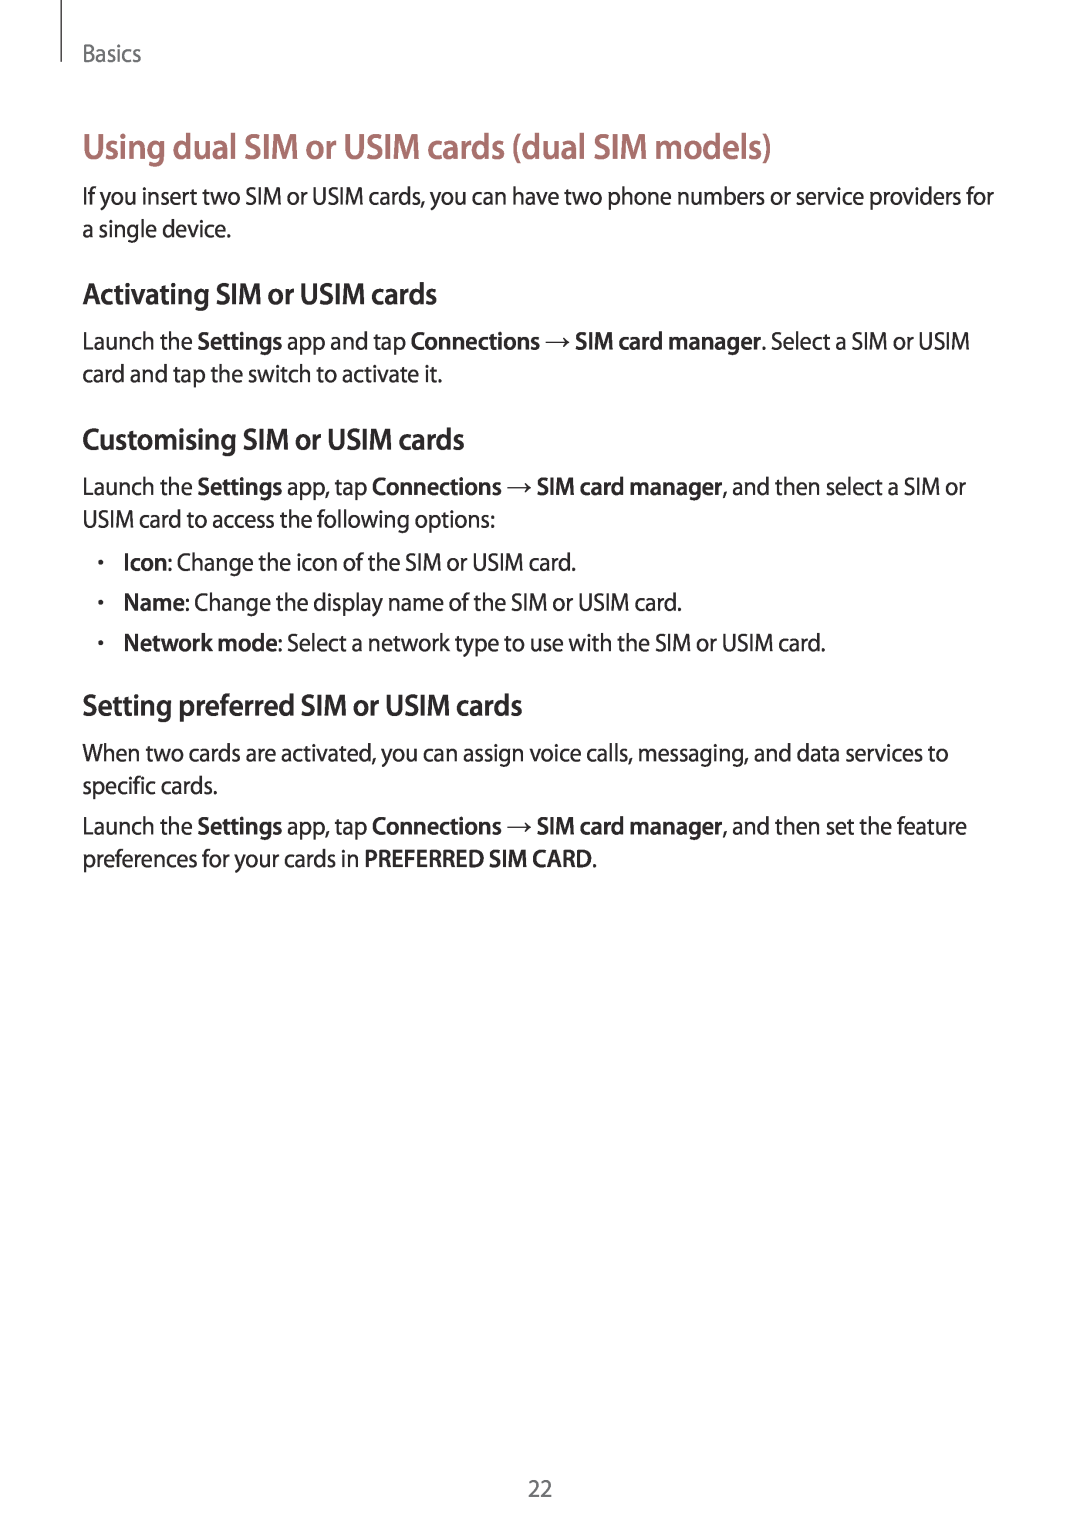 Samsung SM-A730FZKGKSA, SM-A530FZDDXEF Using dual SIM or USIM cards dual SIM models, Activating SIM or USIM cards, Basics 